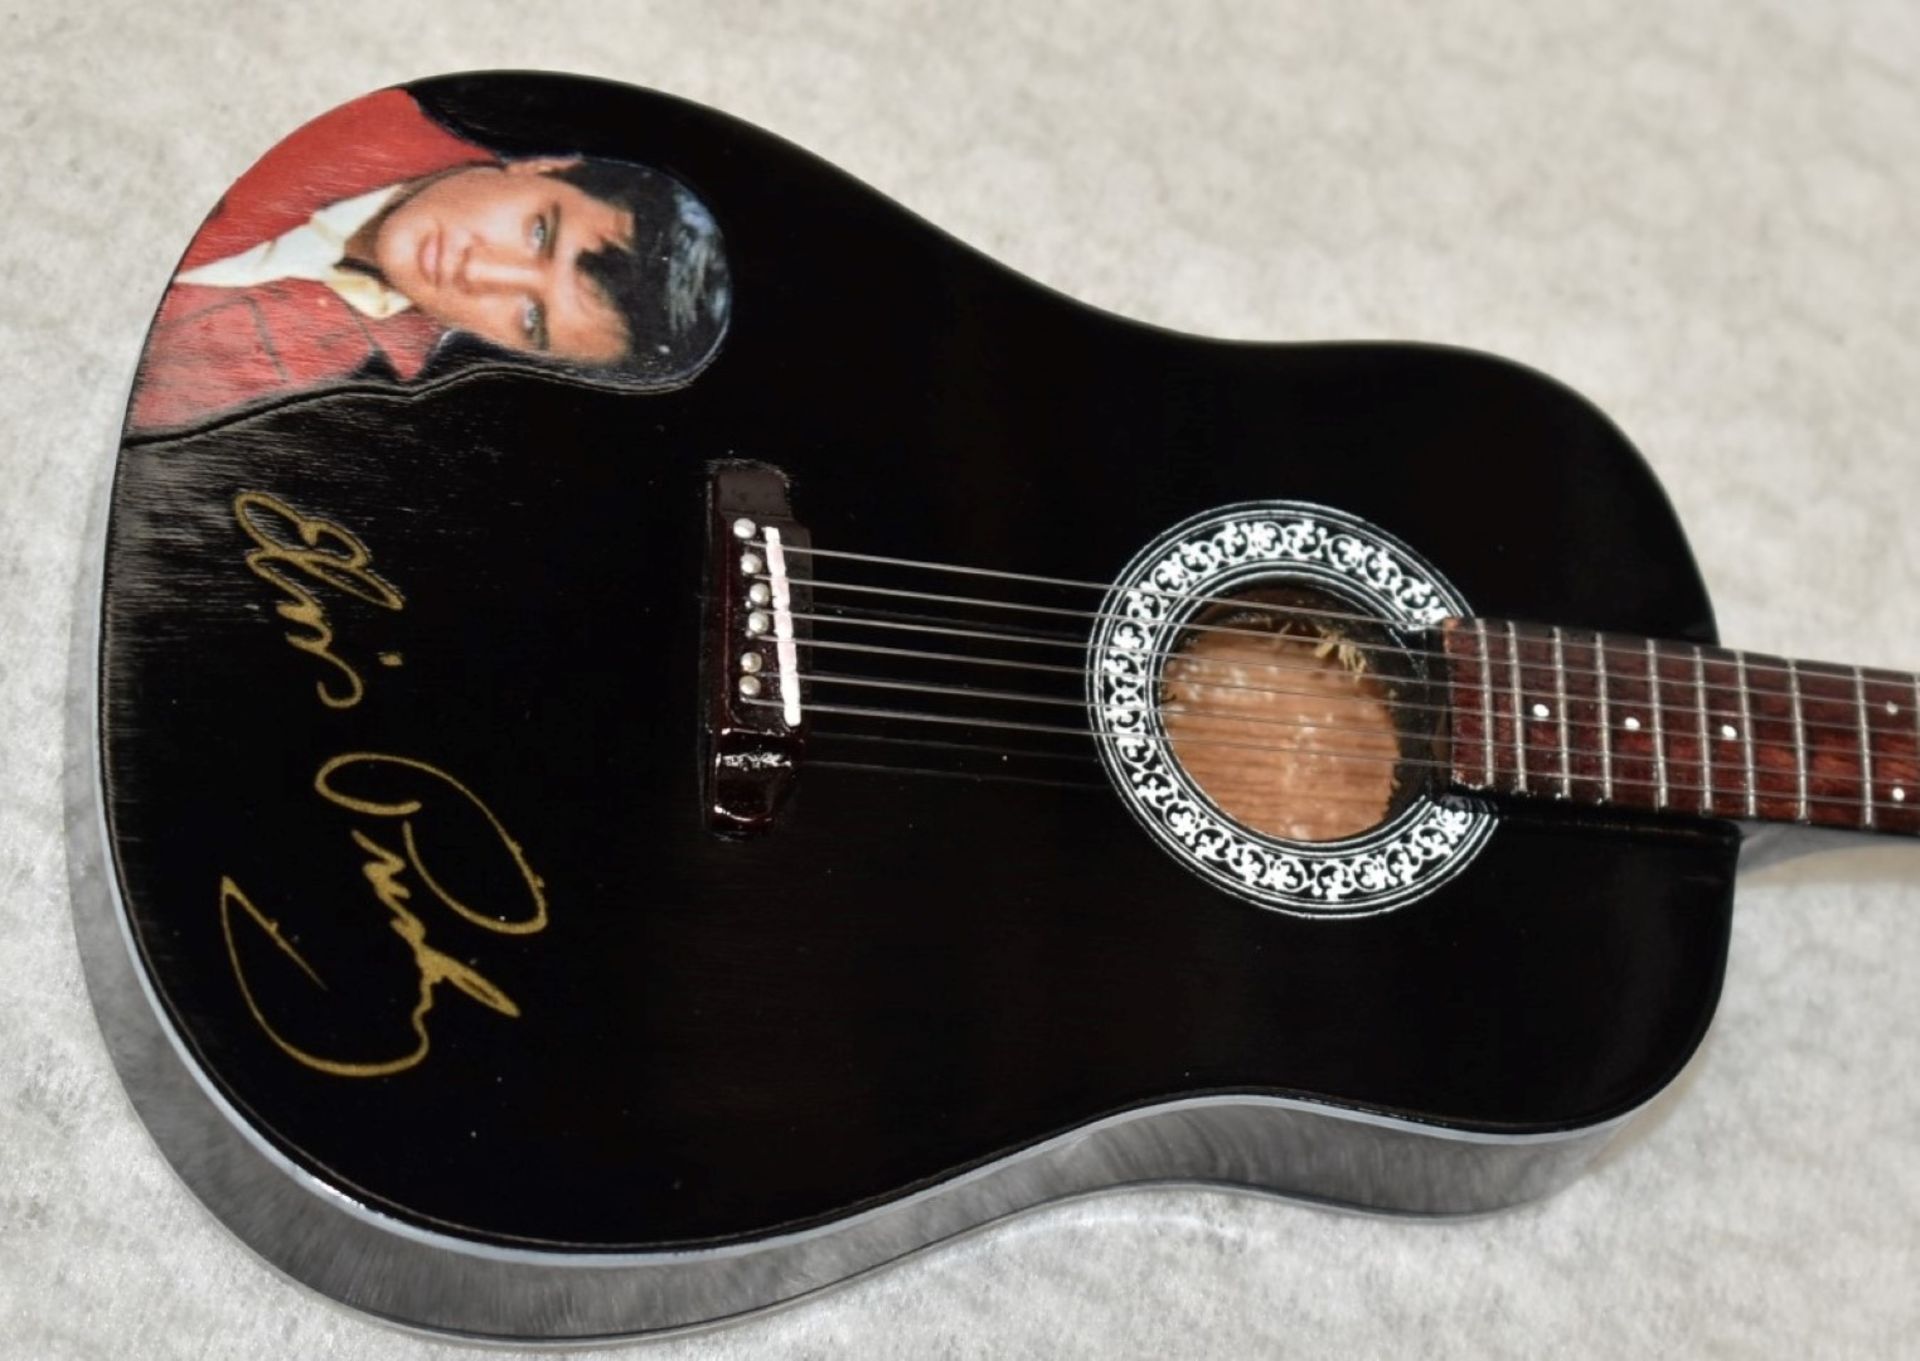 1 x Miniature Hand Made Guitar - Elvis Presley Black Gibson Acoustic Guitar - New & Unused - RRP £ - Image 4 of 7